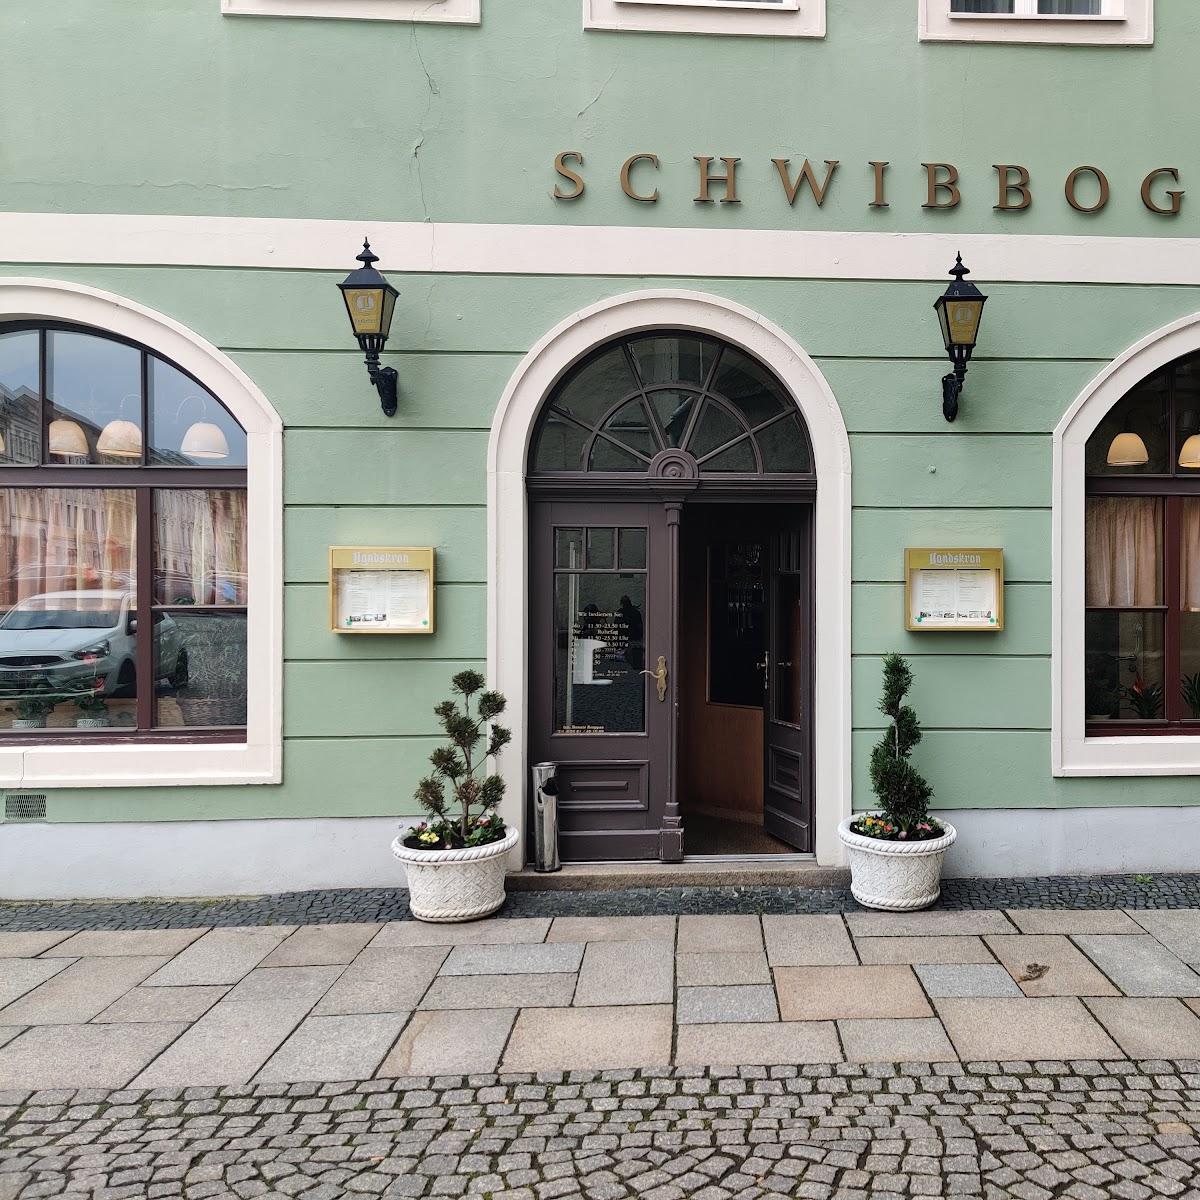 Restaurant "Restaurant Schwibbogen" in Görlitz